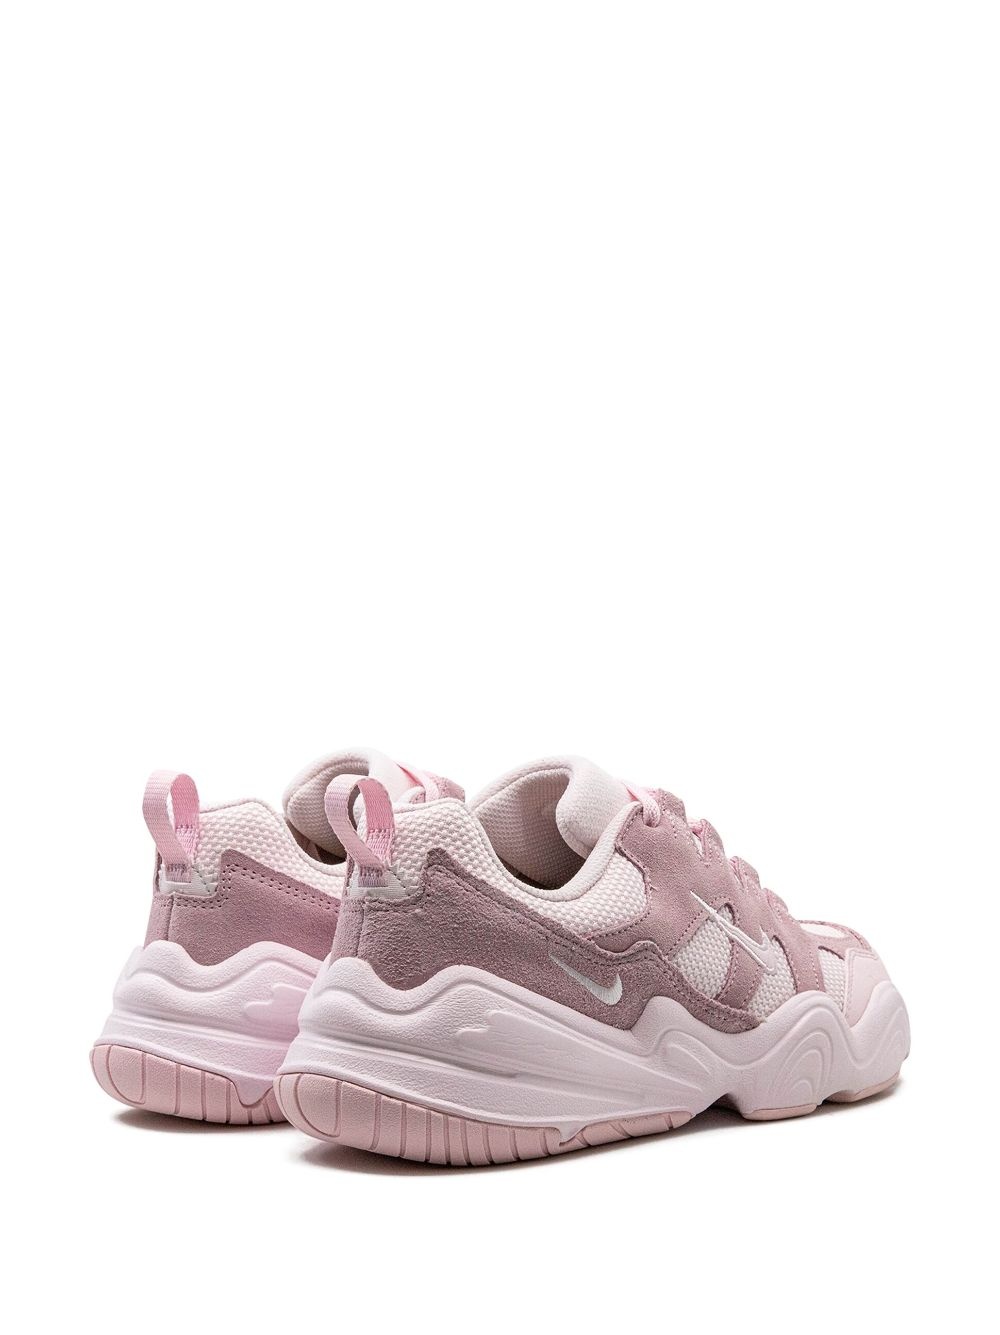 Tech Hera "Pearl Pink" sneakers - 3